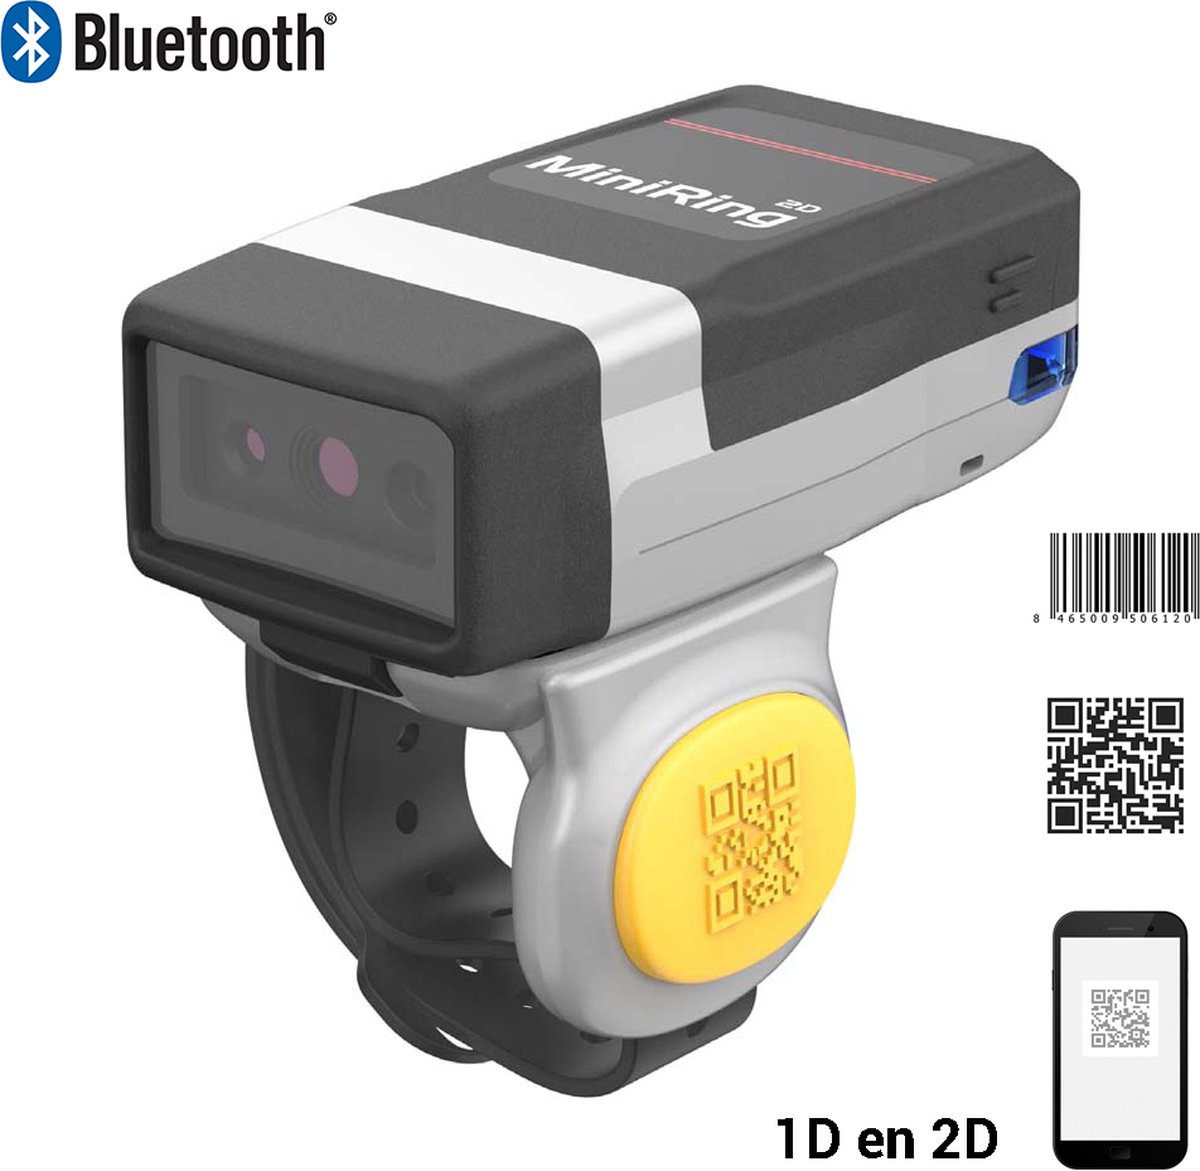 Generalscan GS R1521 - Bluetooth Barcode scanner - Ringscanner - 2D-barcodes - Handscanner